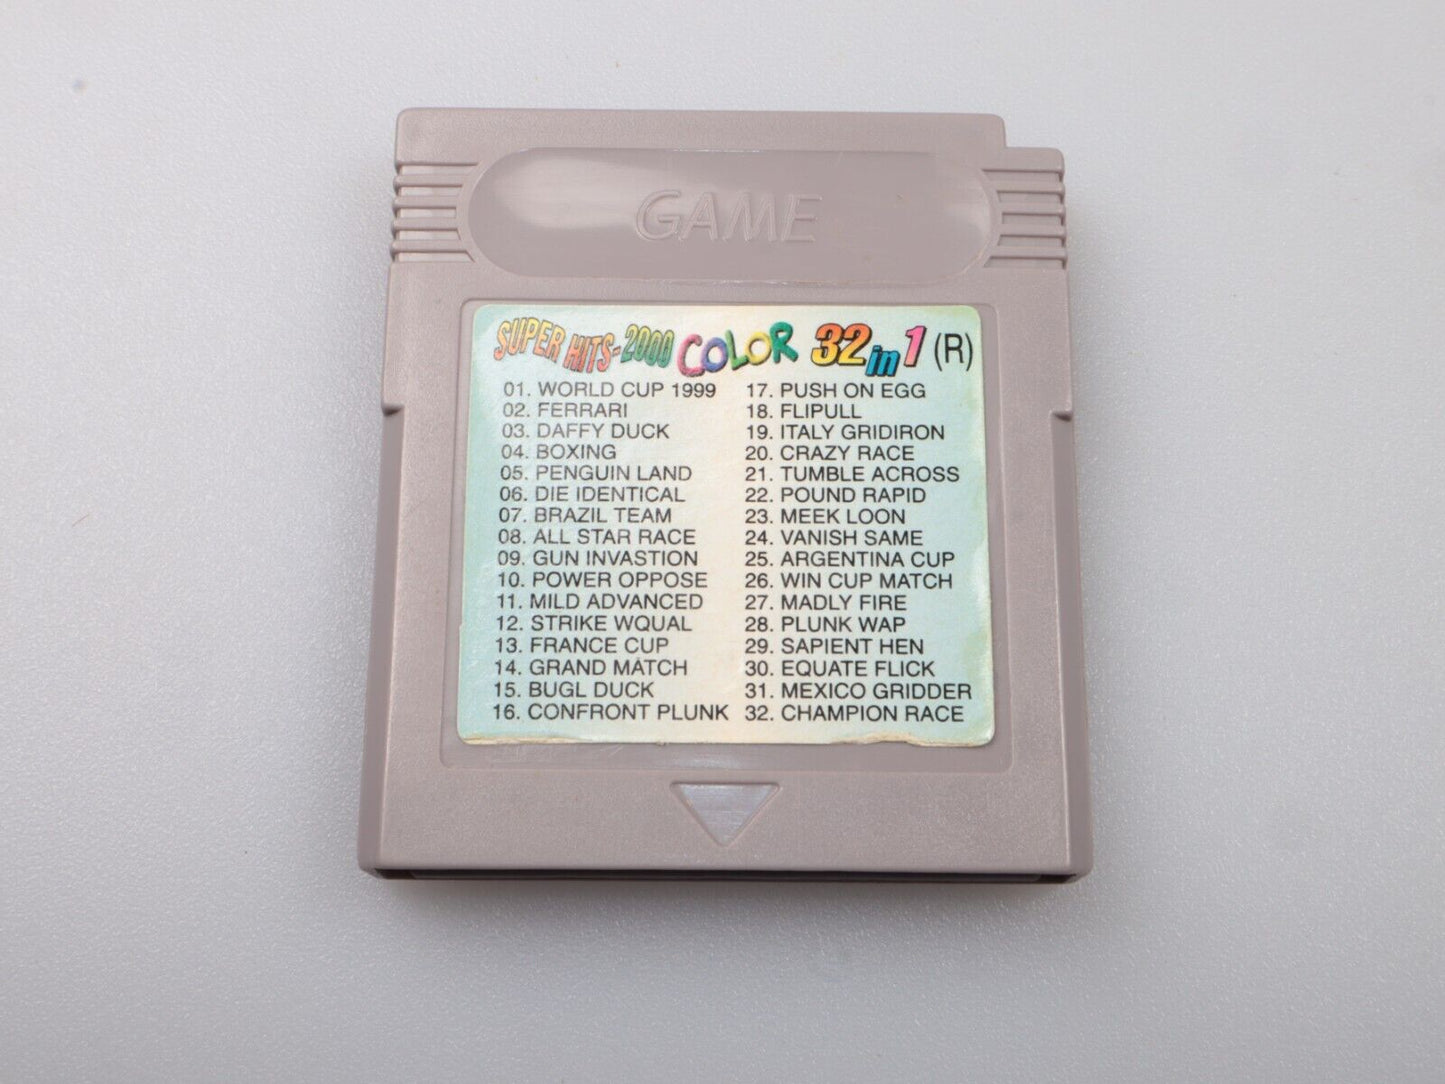 Gameboy | Super Hits-2000 Kleur 32 in 1 | Nintendo-cartridge 